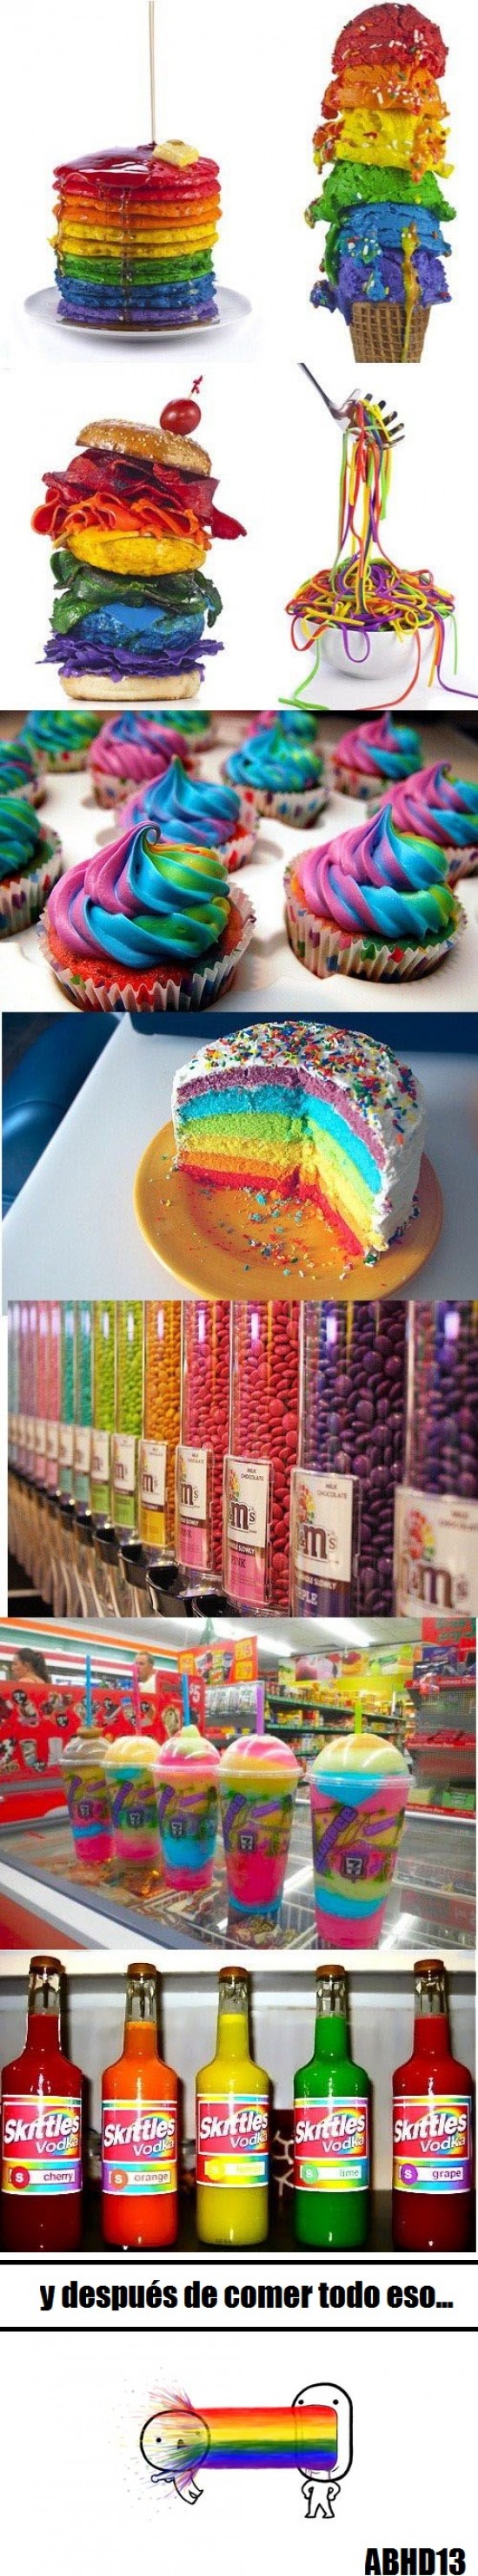 arcoiris,colores,comida,dulces,puke rainbow